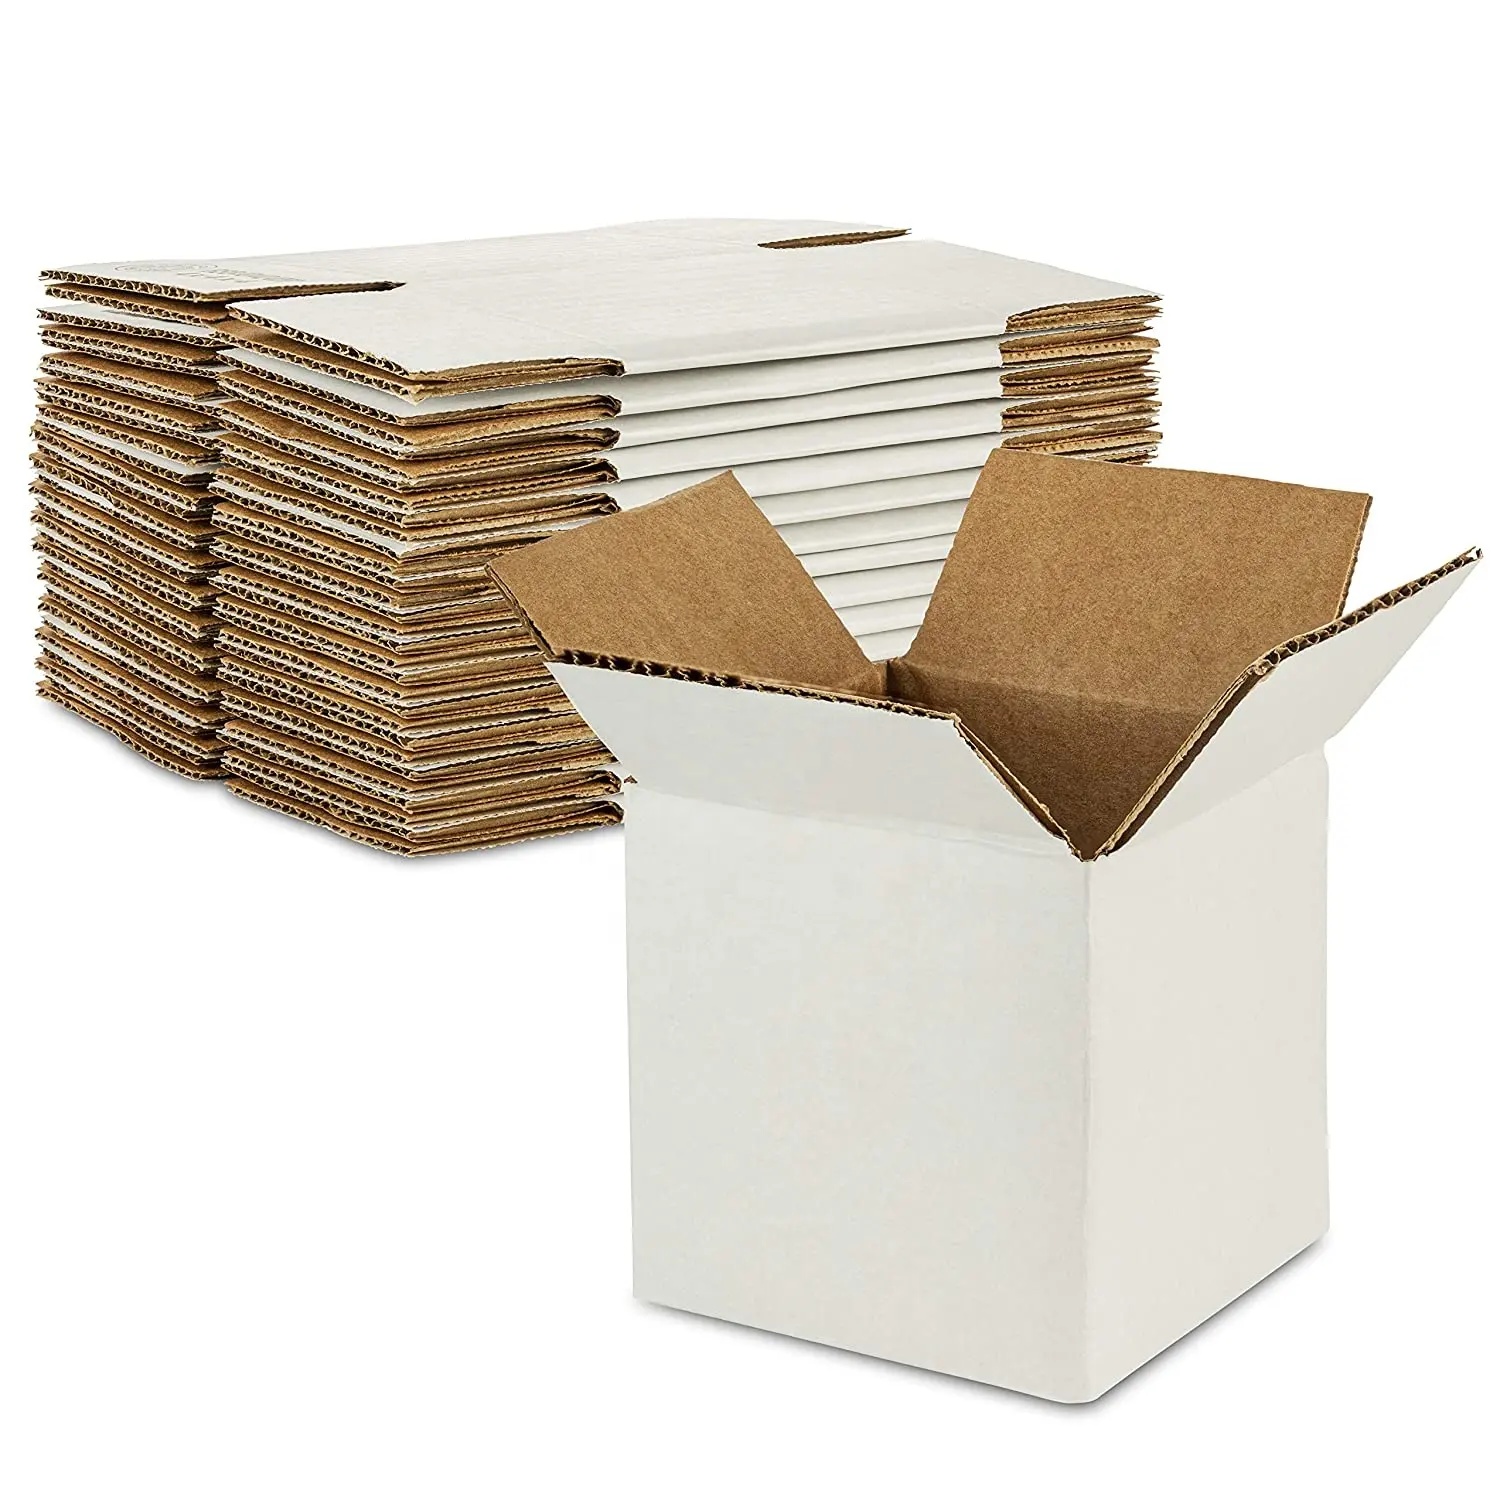 Маленькие коробки для доставки, картонные коробки с логотипом на заказ для упаковки для доставки и отправки, размеры 4x4x4 дюйма